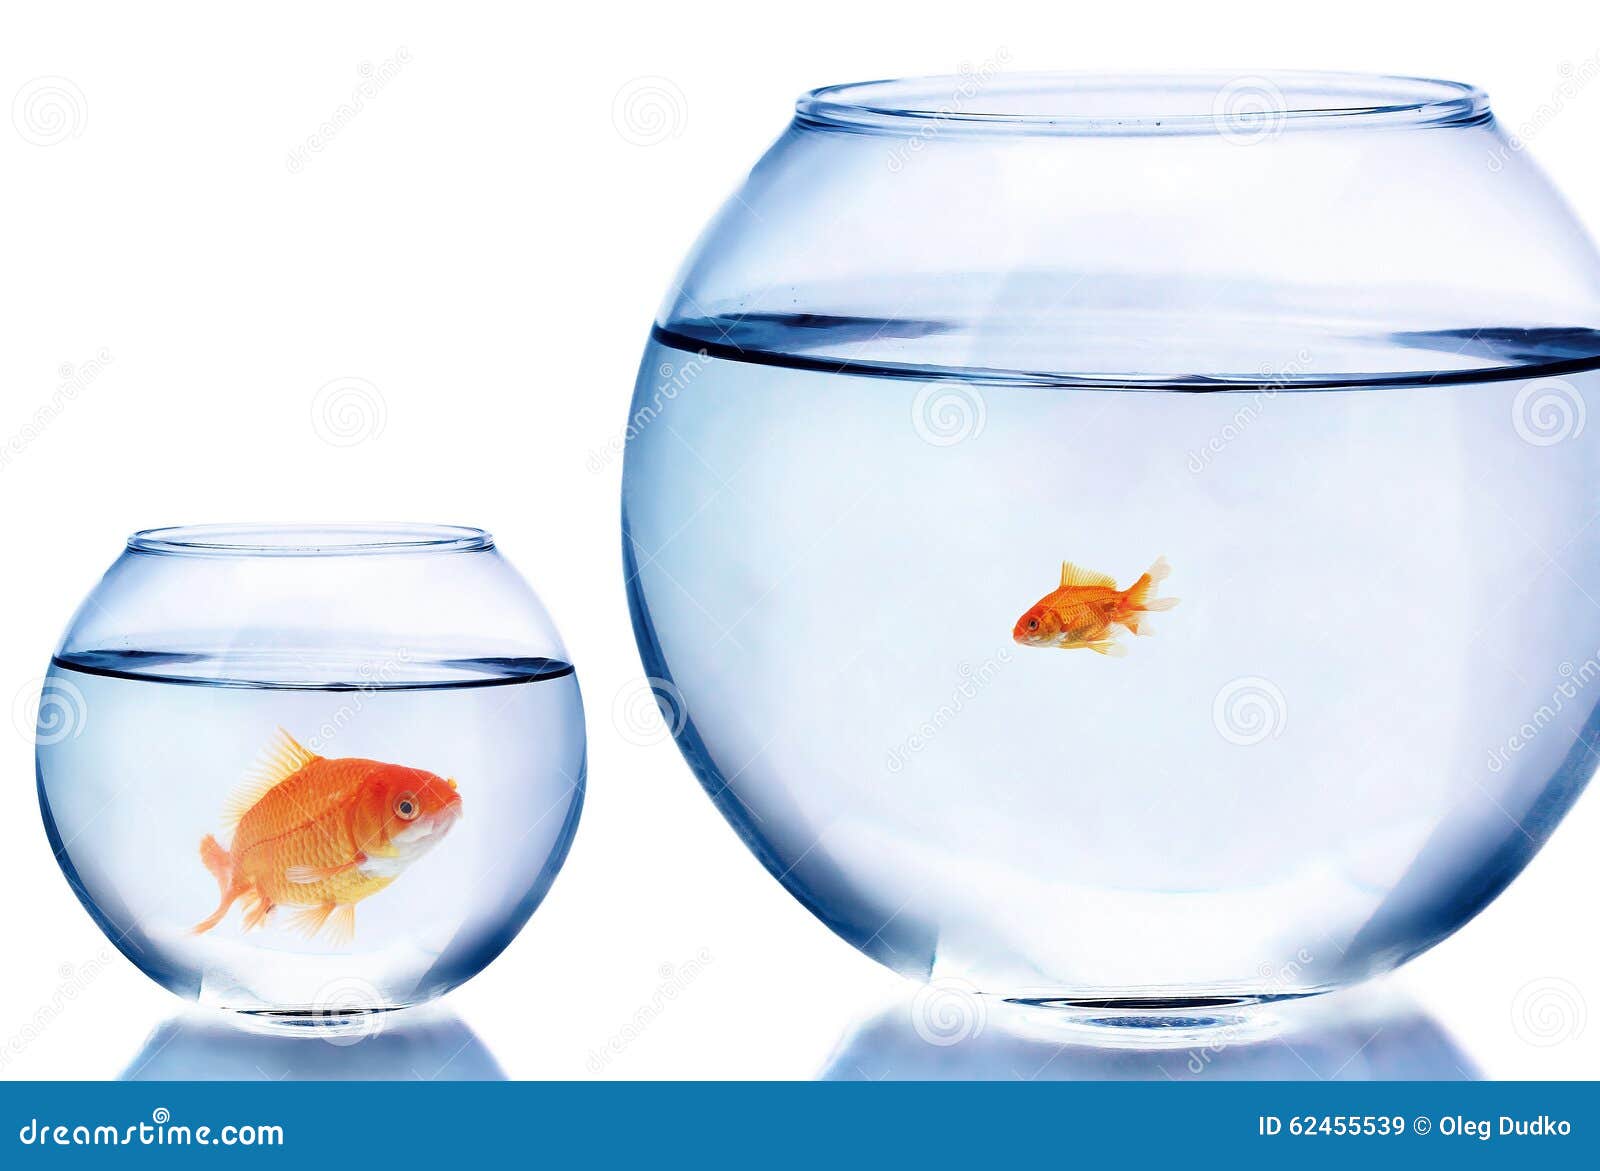 7,046 Goldfish Fishbowl Stock Photos - Free & Royalty-Free Stock Photos  from Dreamstime